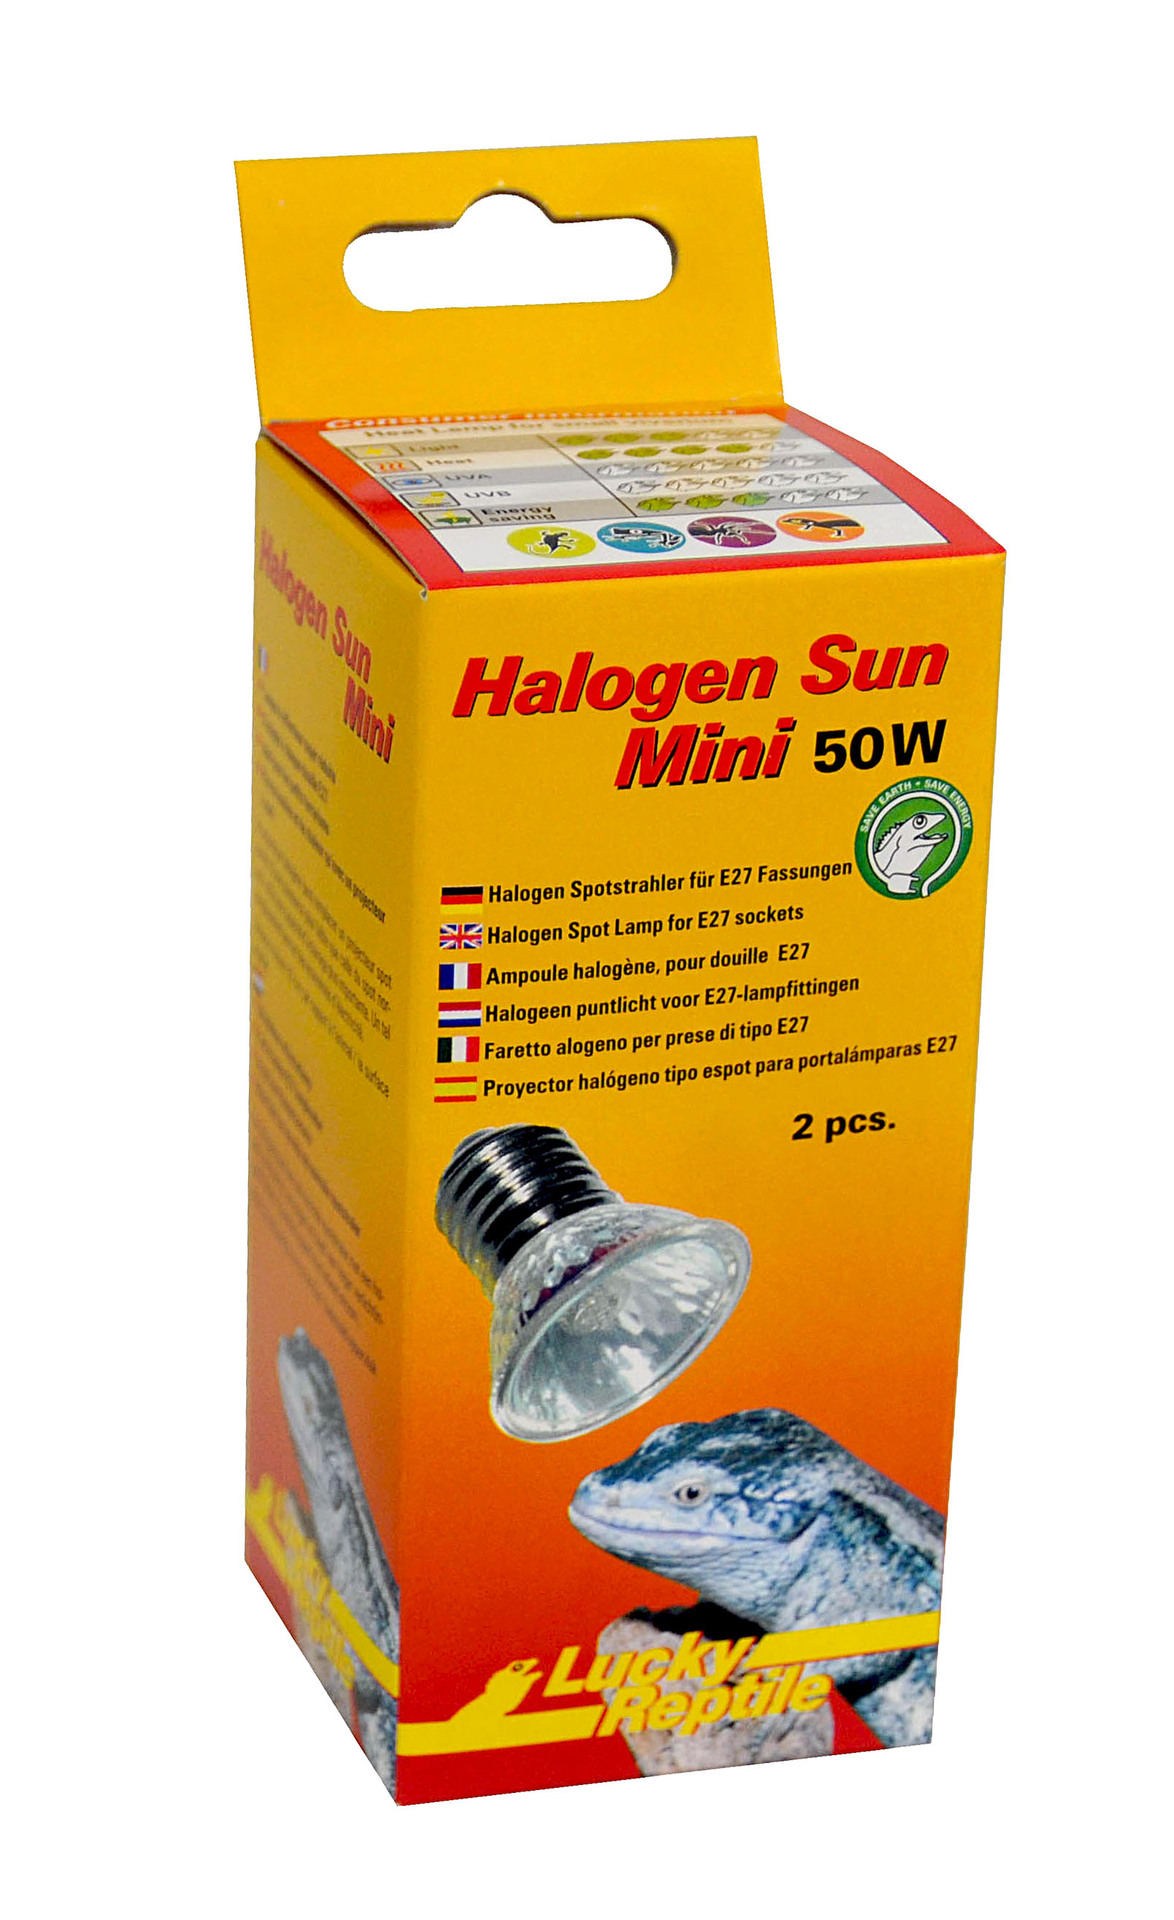 Halogen Sun Mini Doppelpackung